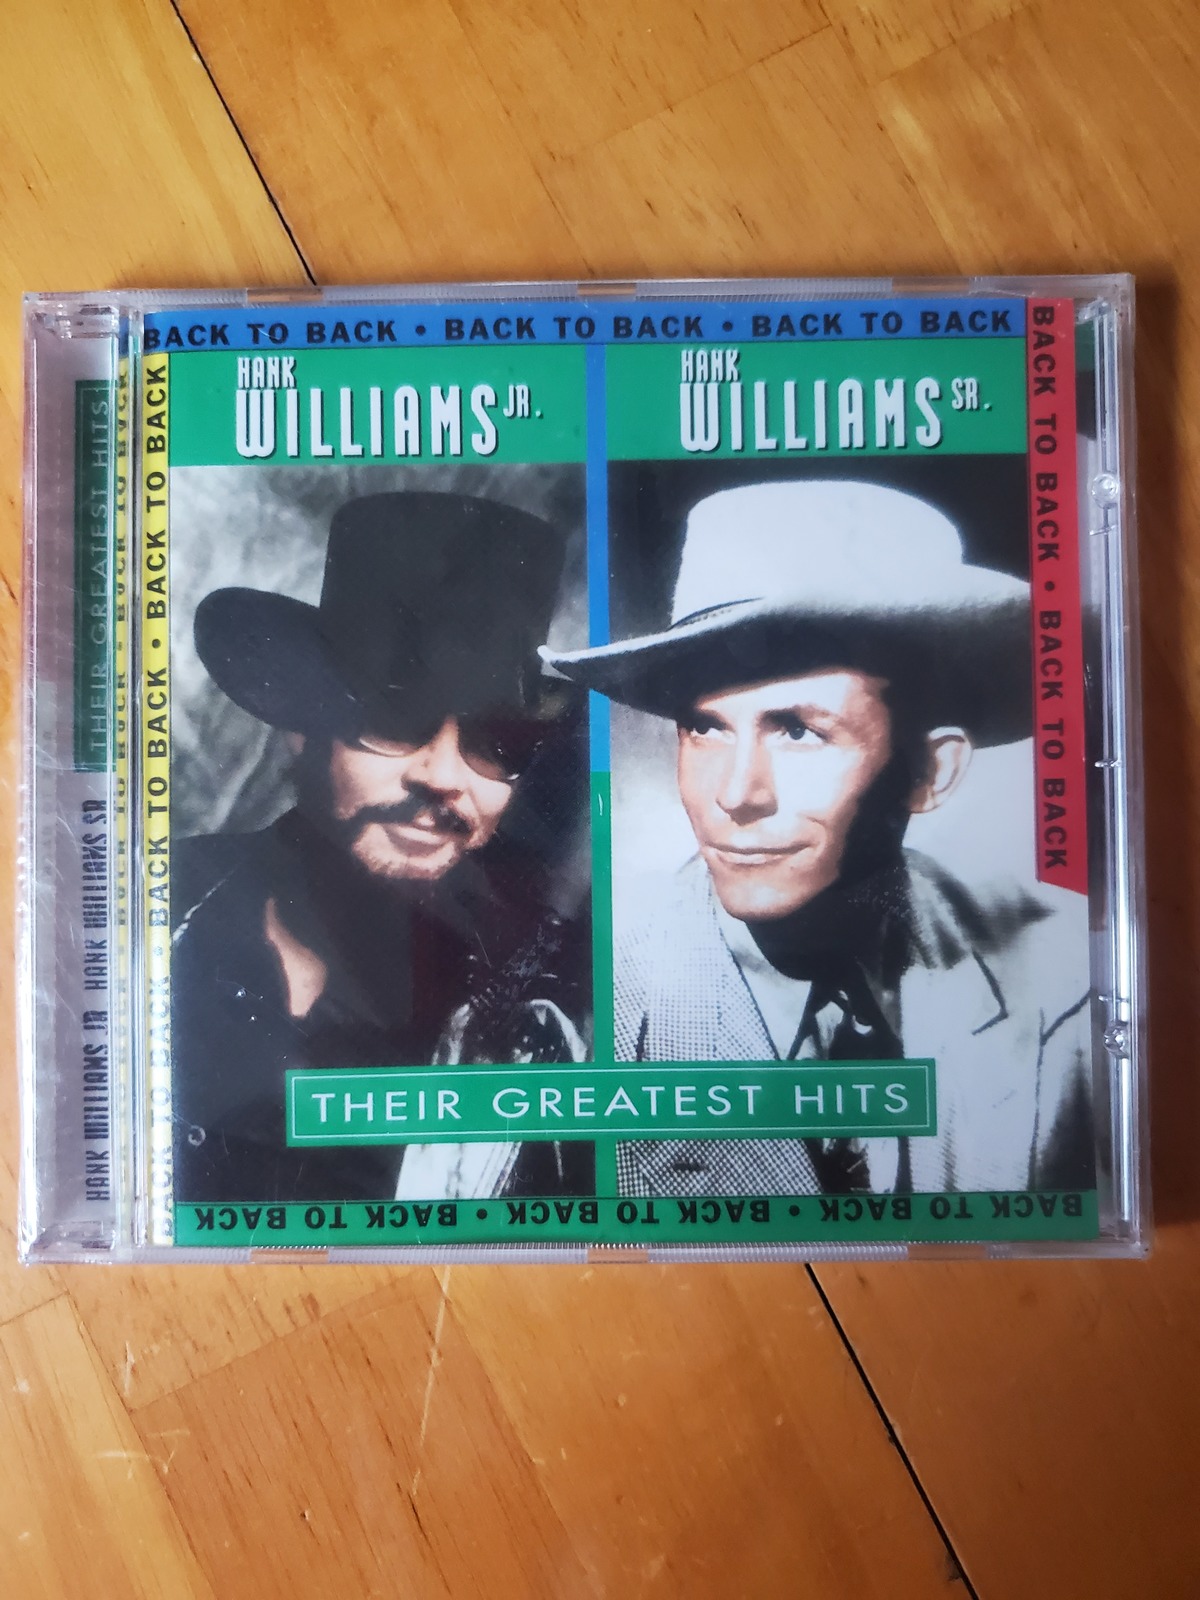 Hank Williams Sr. & Hank Williams Jr. Back to Back Greatest Hits CD - CDs